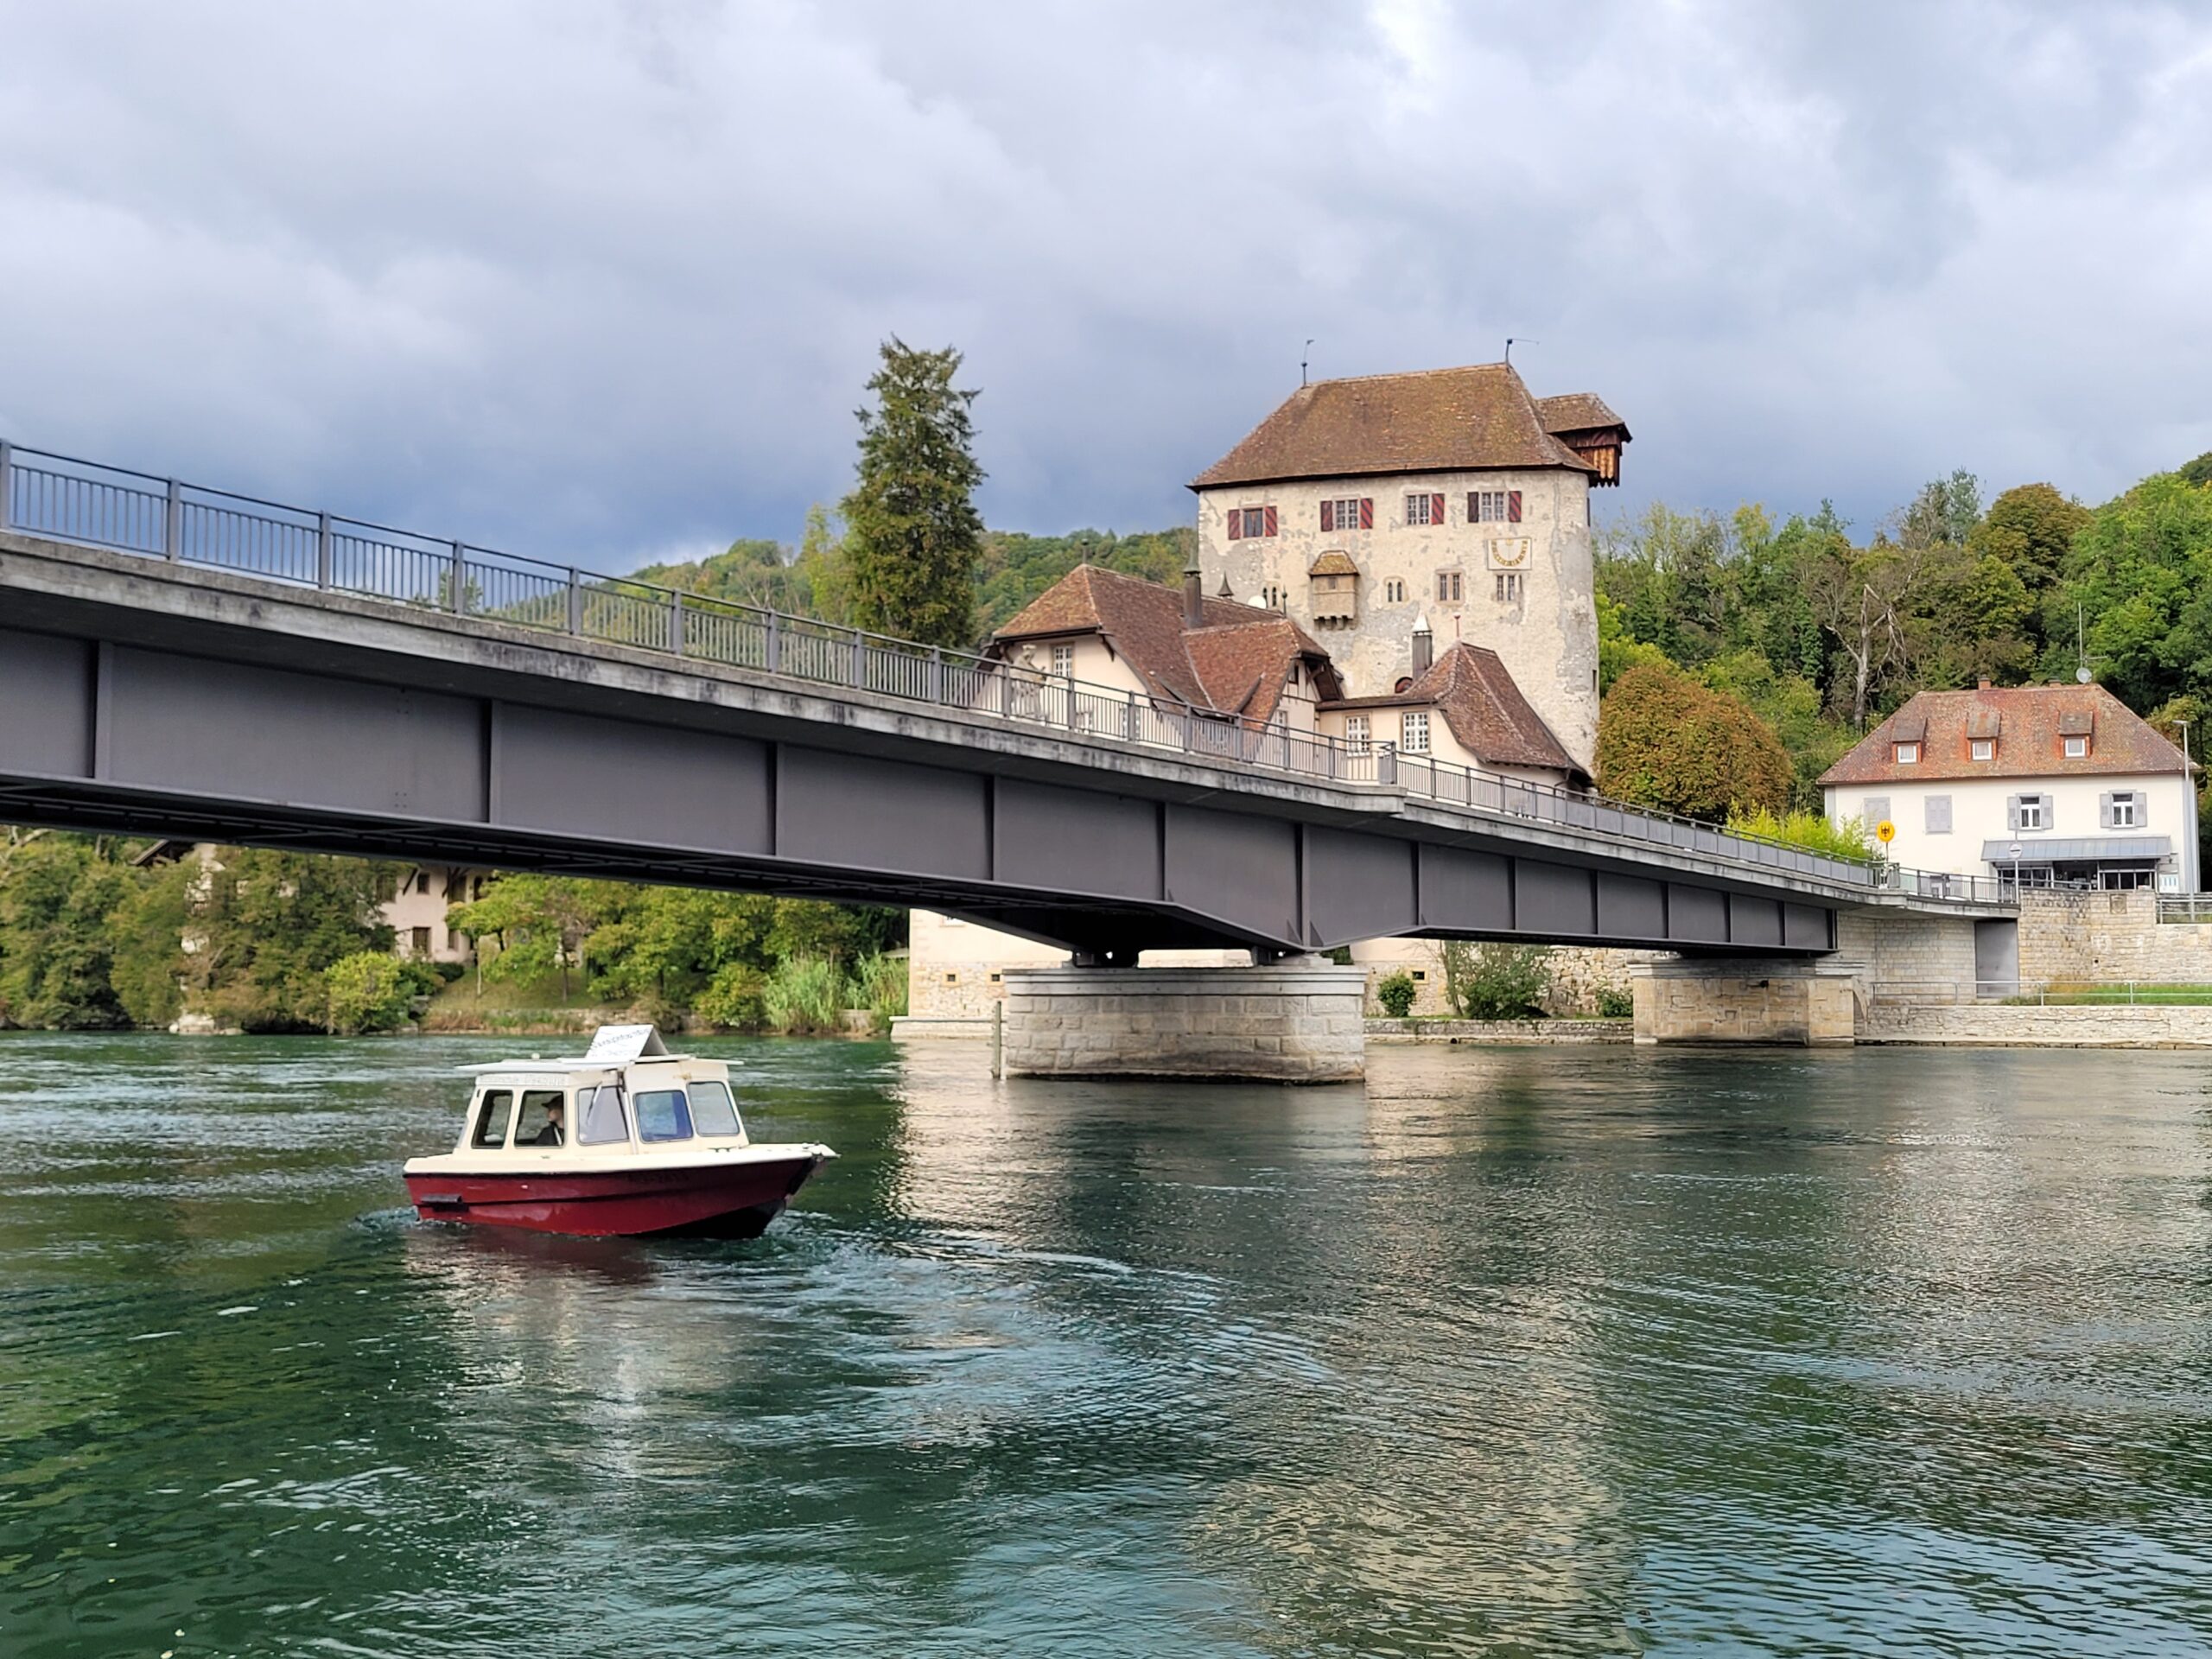 Fahrschulboot vor Rheinbrücke und Schloss Röteln